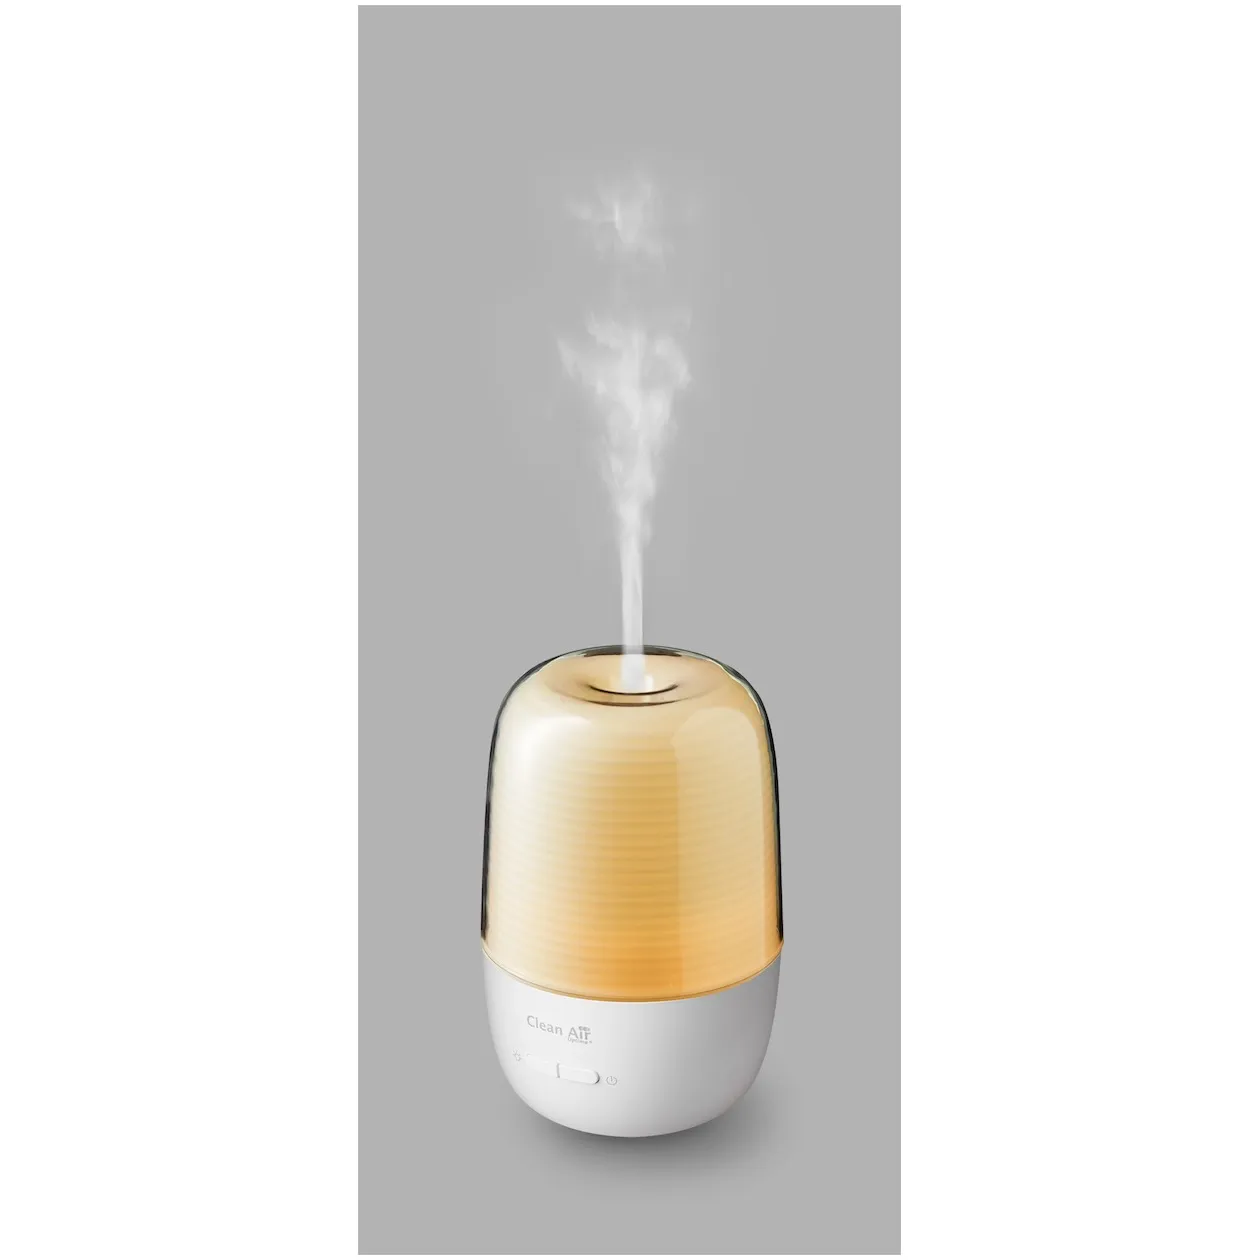 Clean Air Optima AD301 aroma diffuser Wit